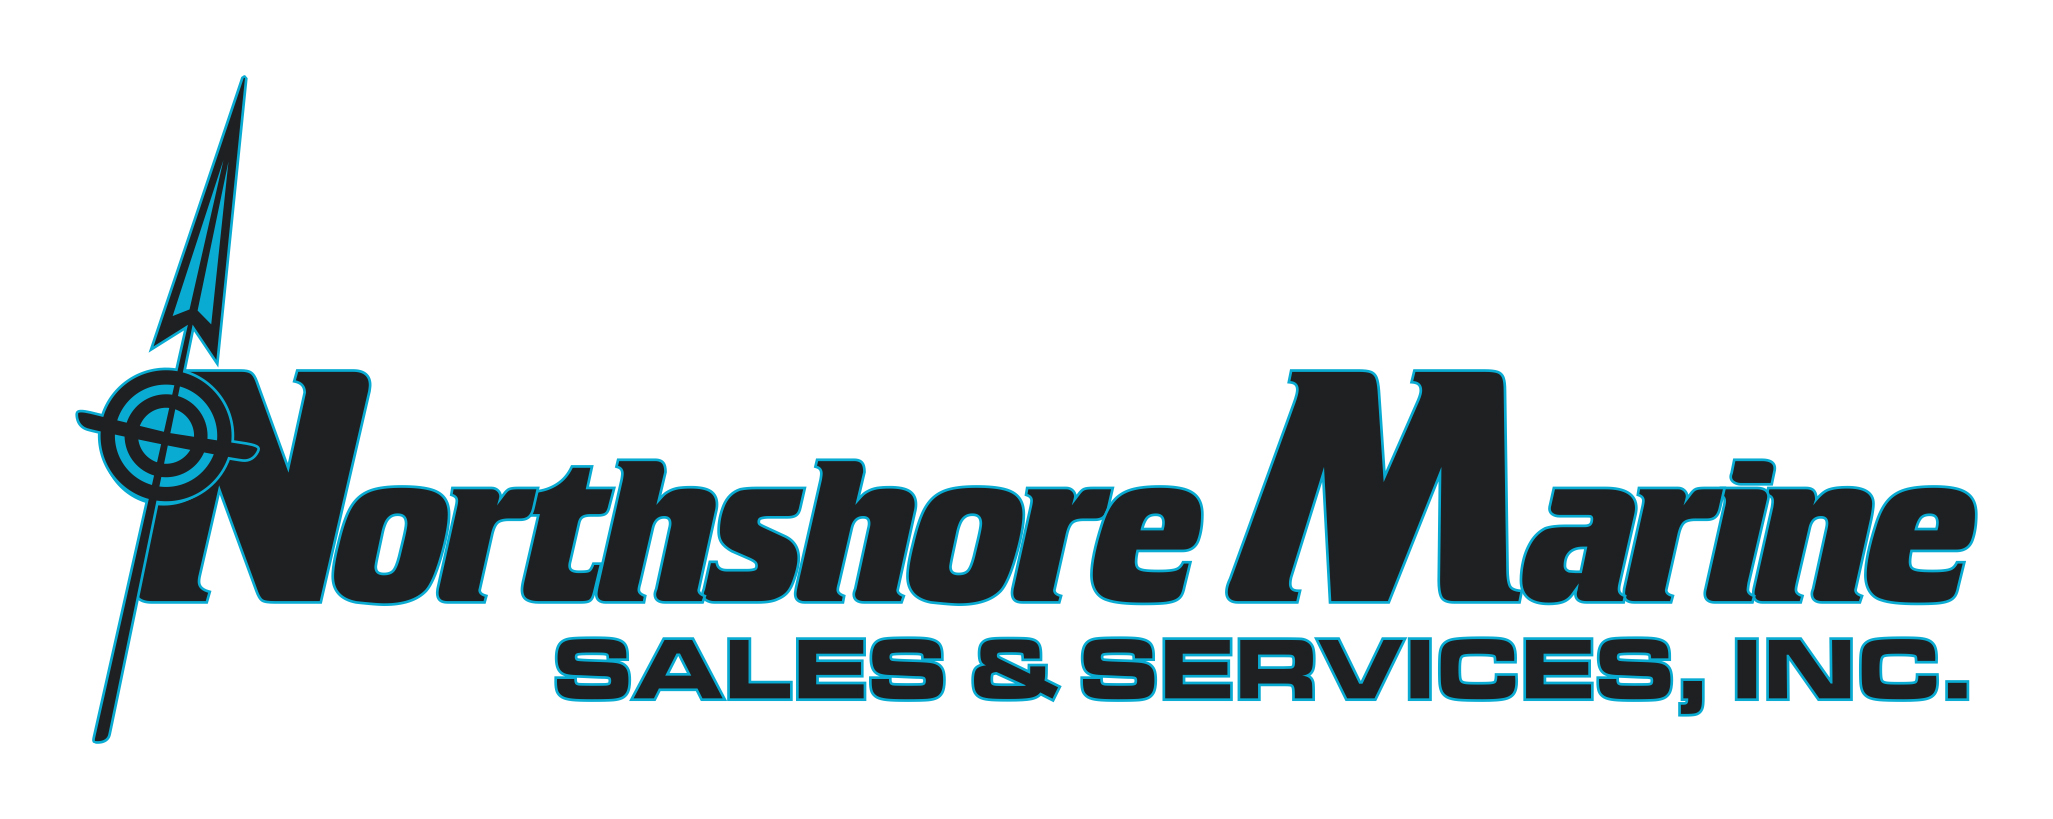 Northshore Marine Sales